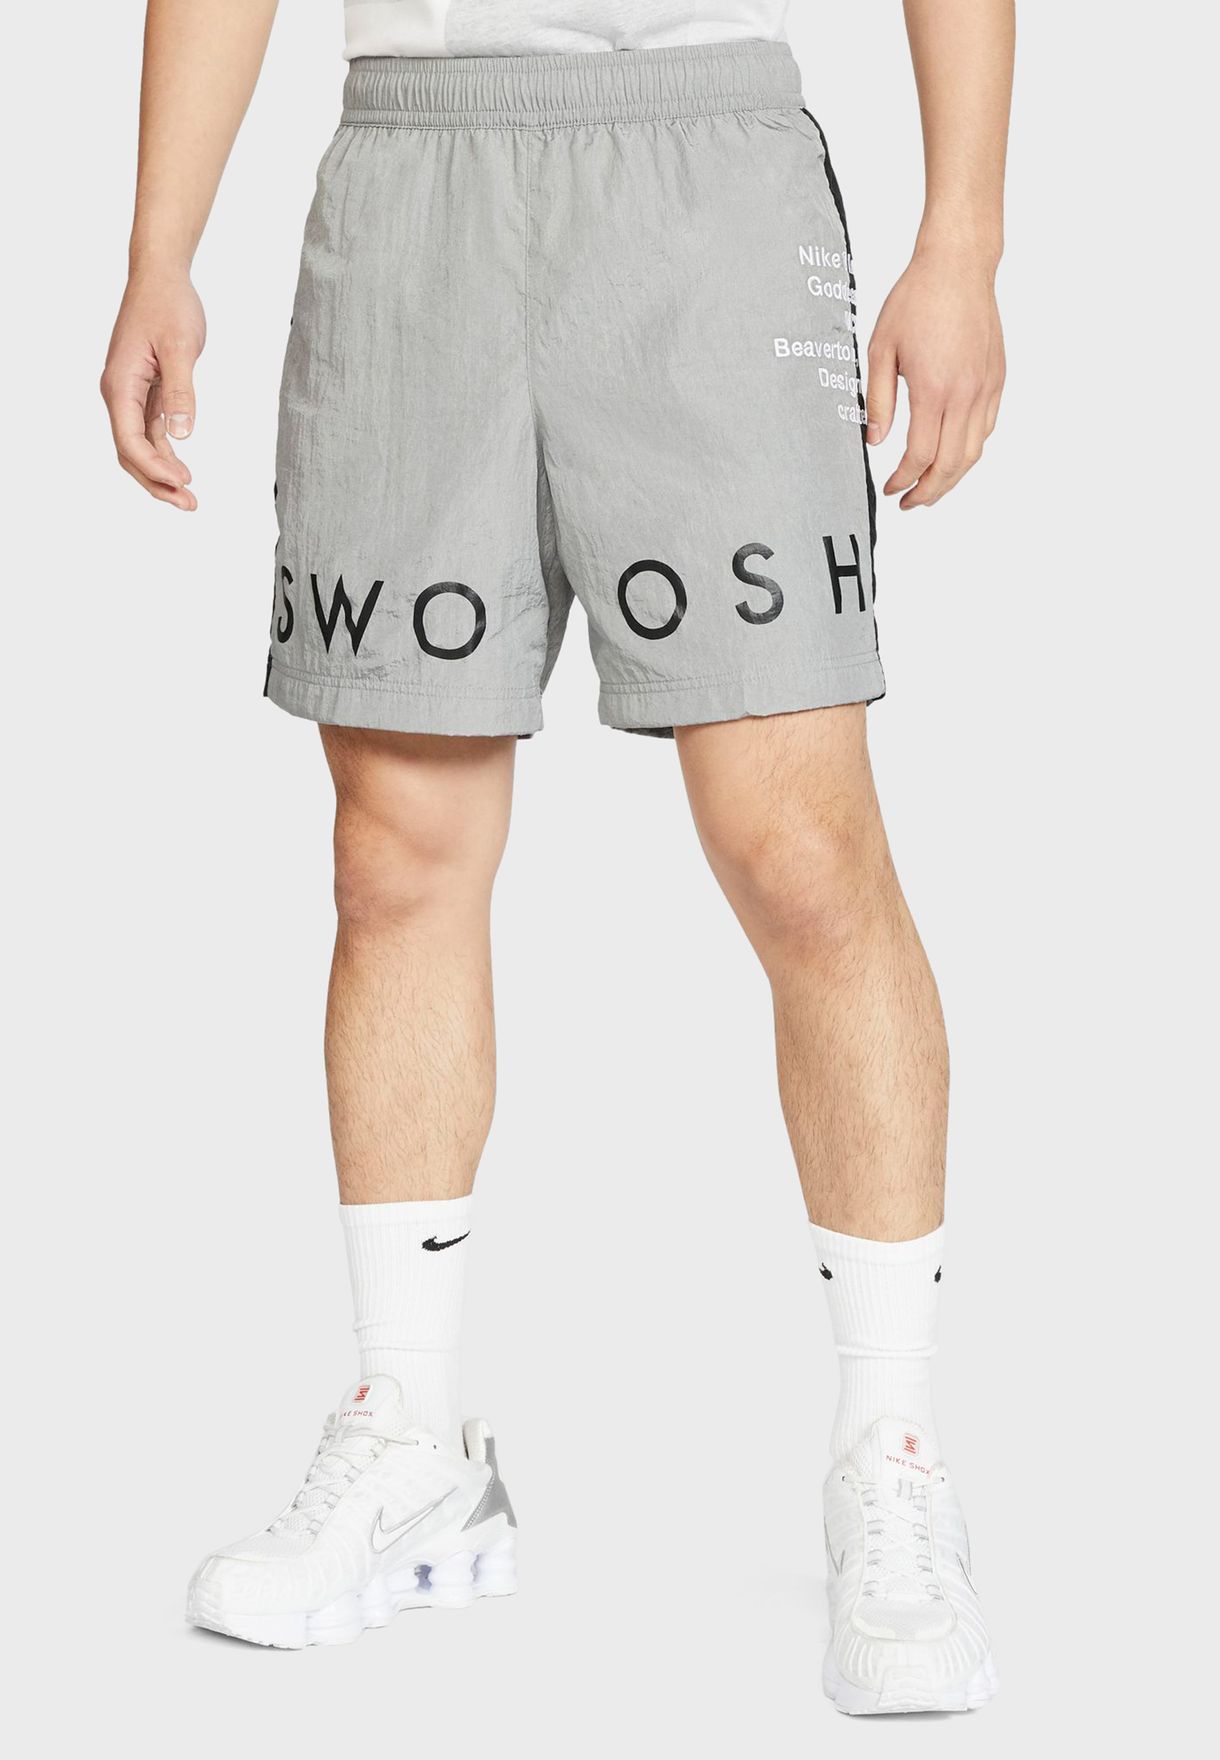 nsw swoosh shorts